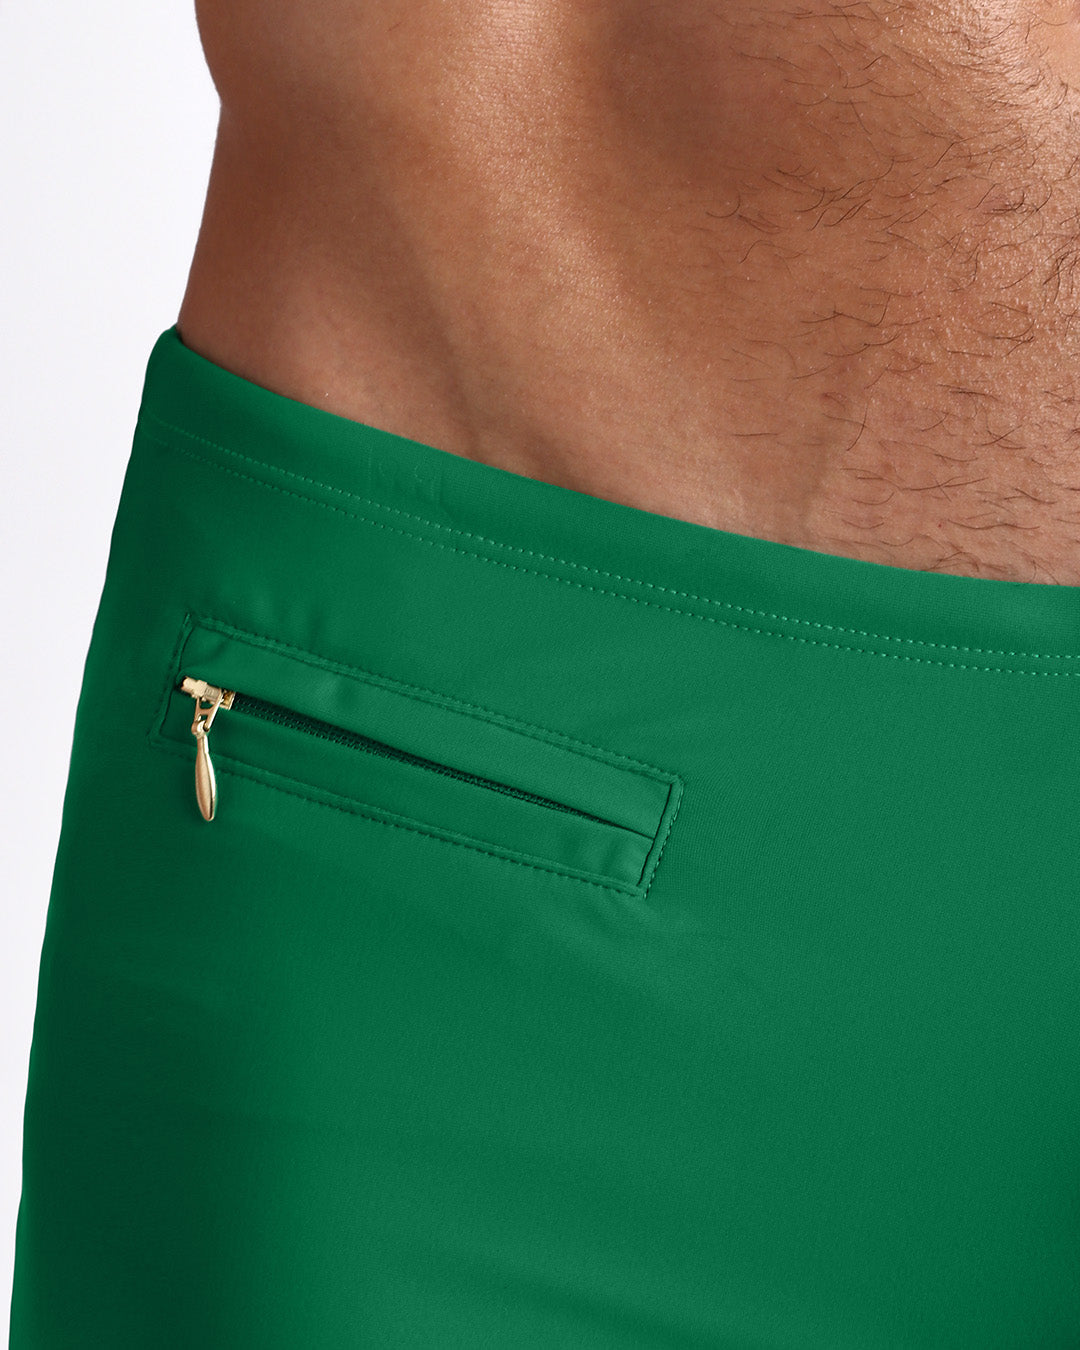 Lacoste - Swimsuit - S / Verde / Men